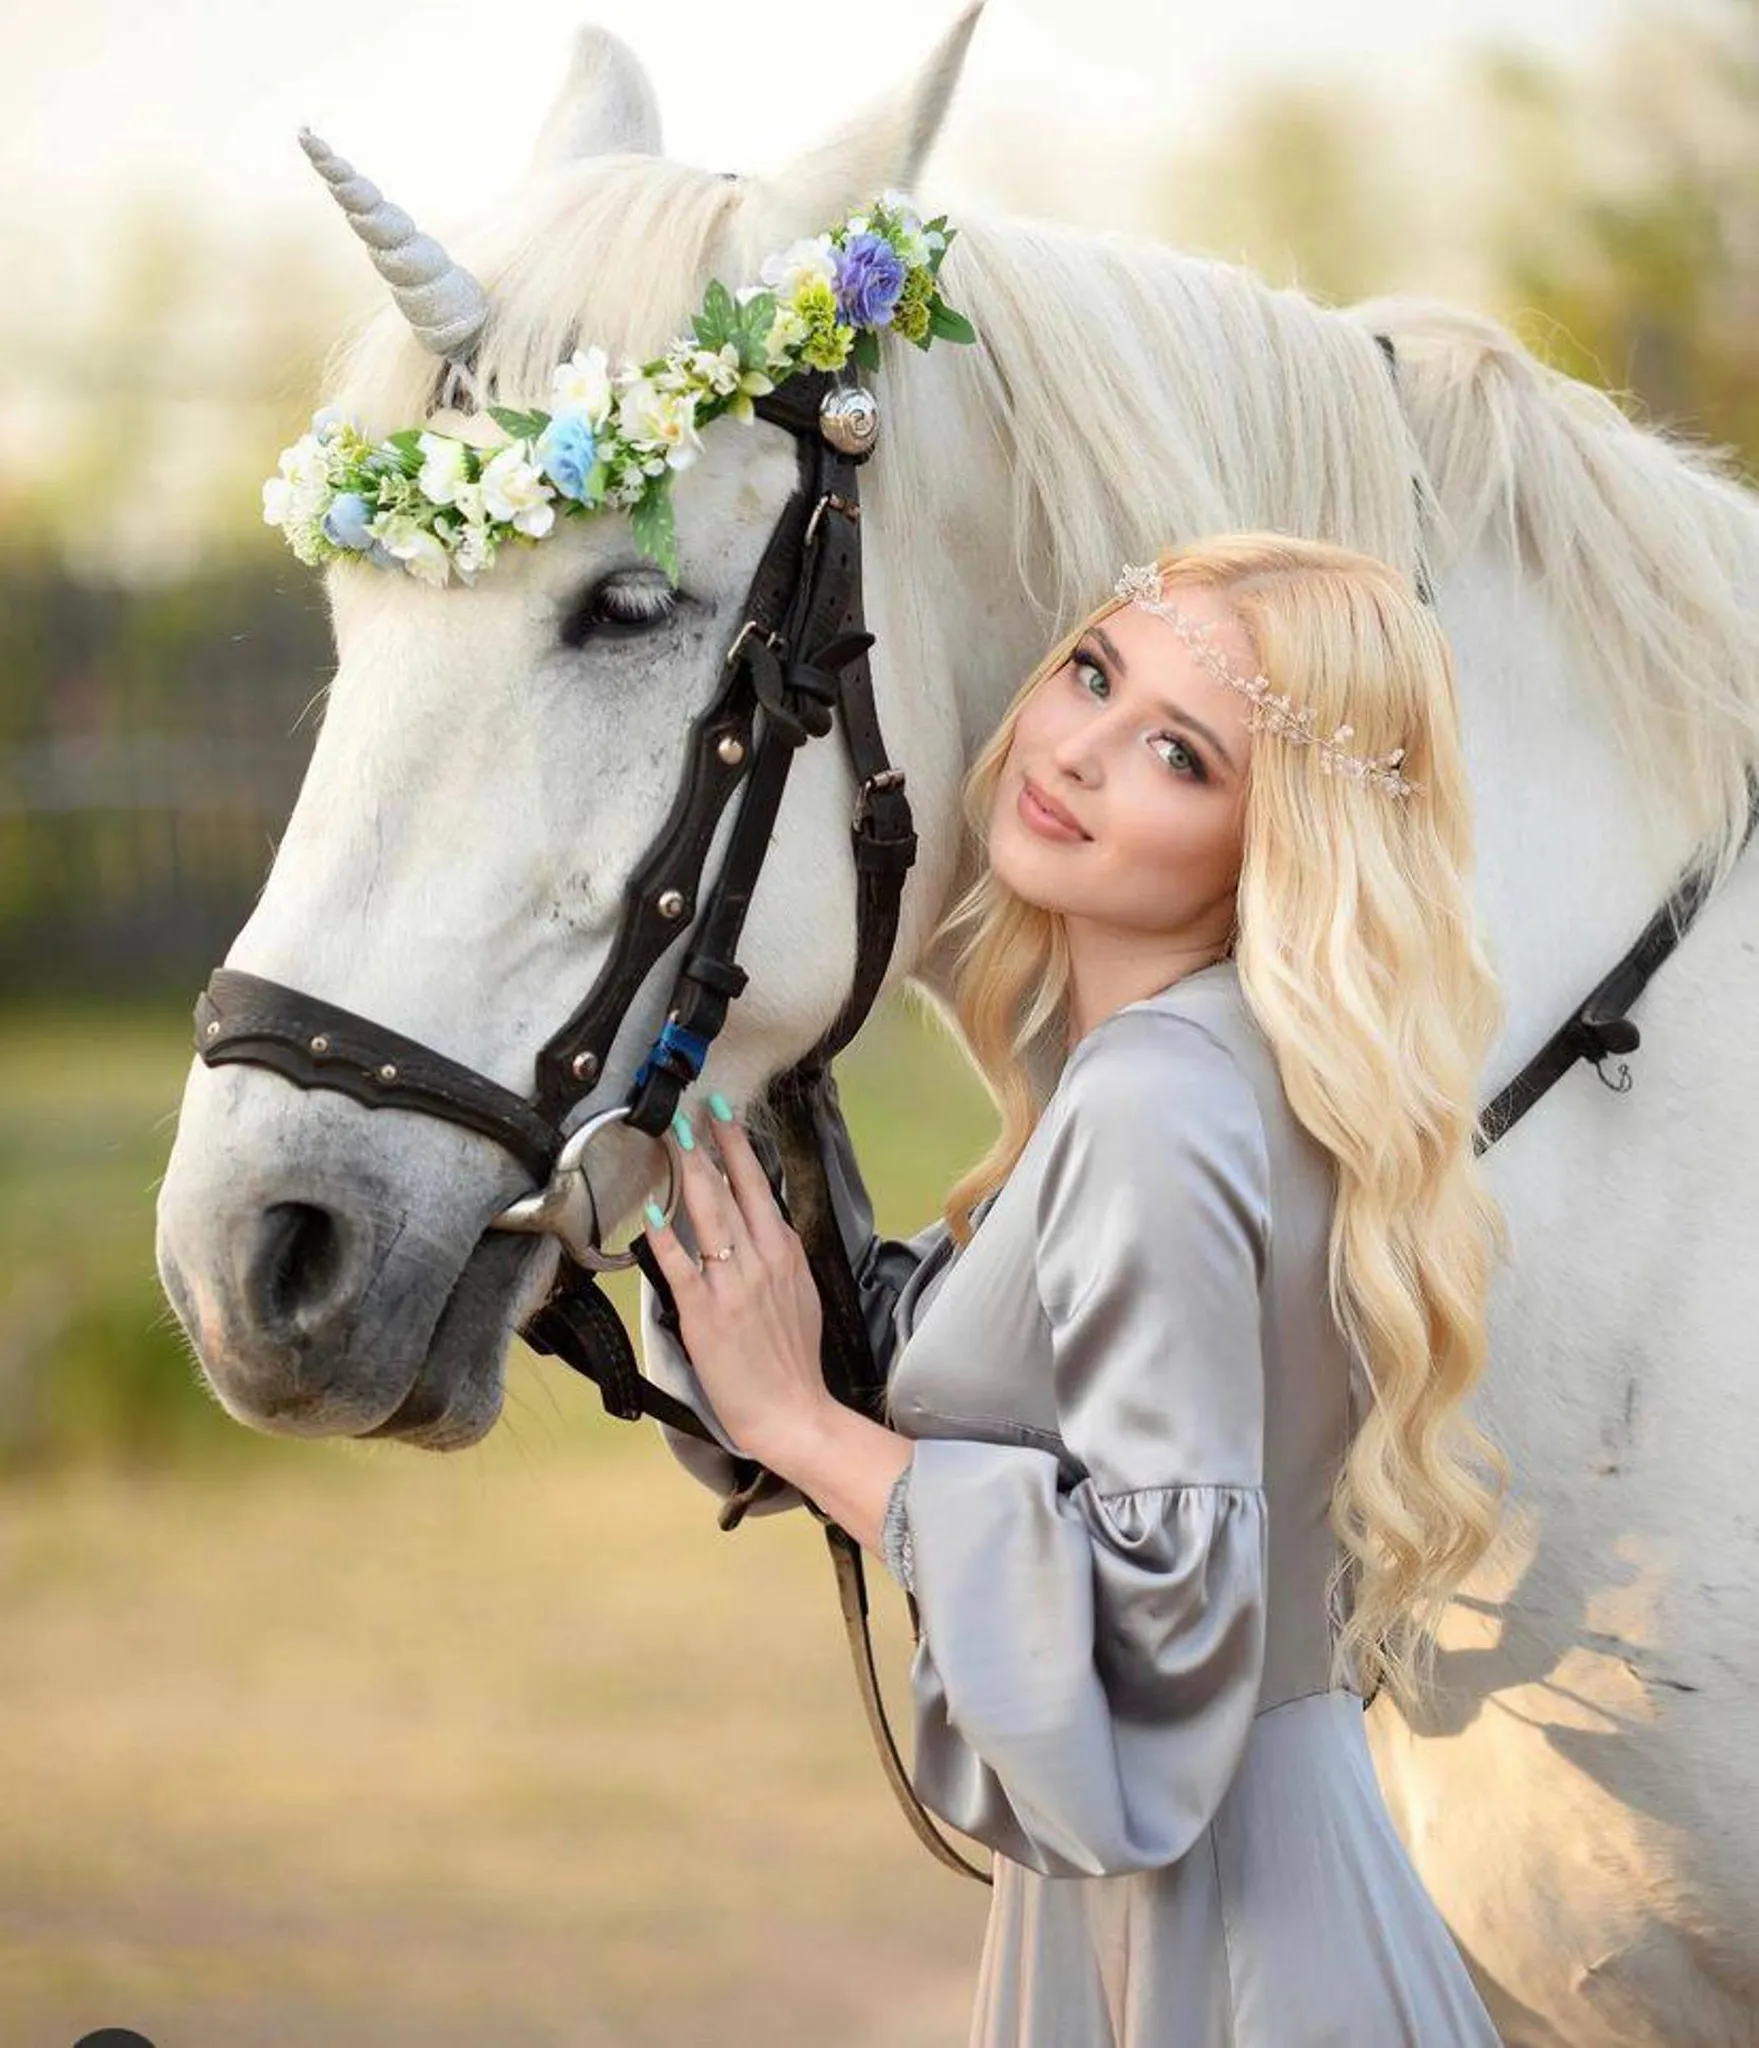 Anastasia rural ukraine brides